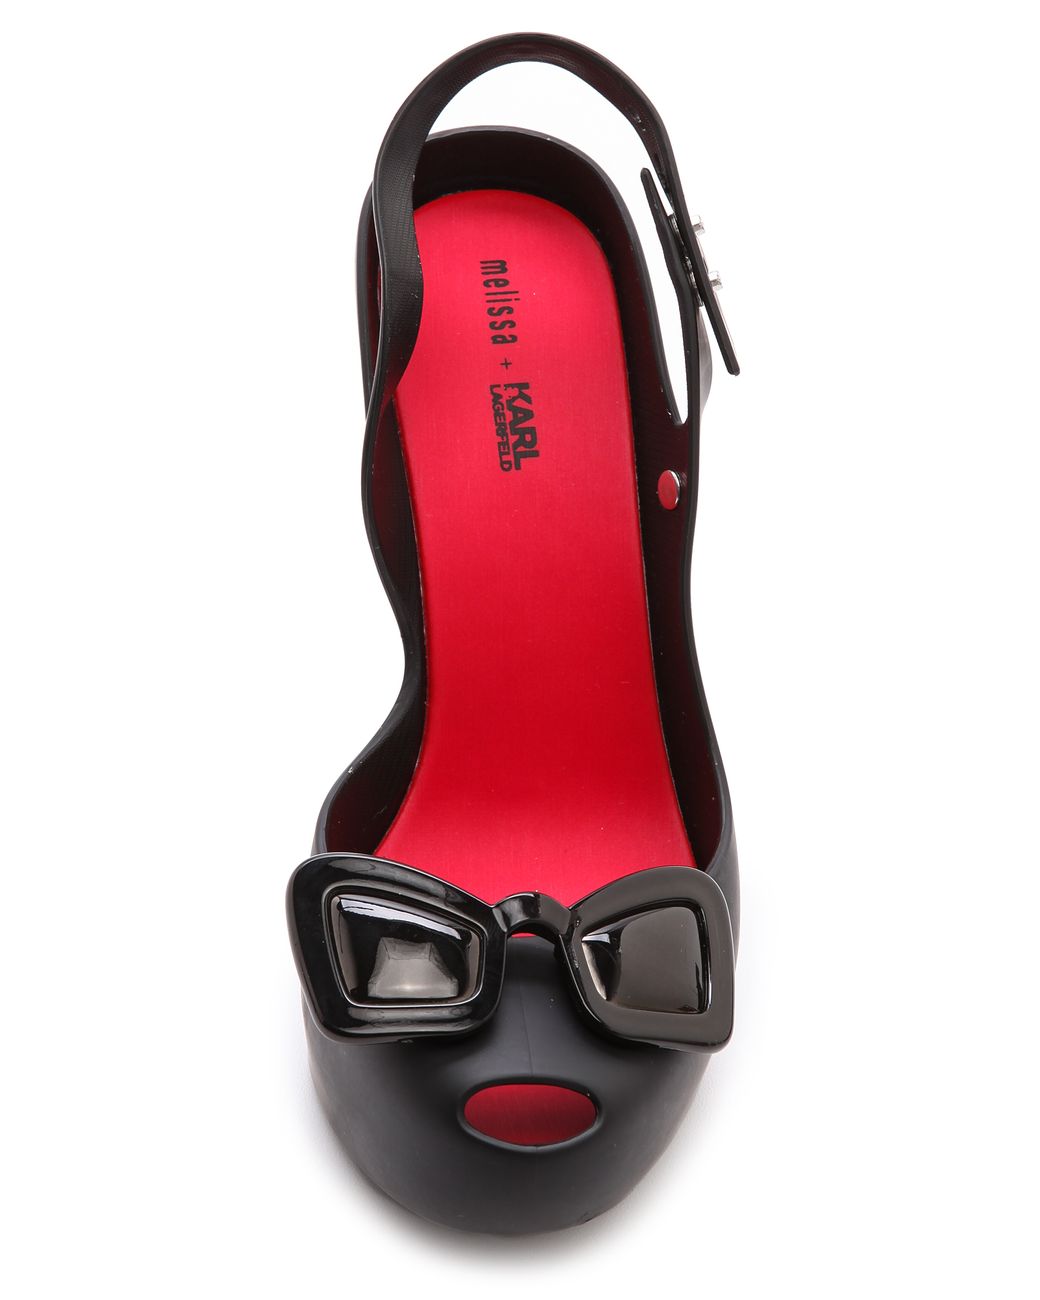 Karl Lagerfeld Ultragirl Sunglasses Pop Culture Black Heels Size 9 Details about   Melissa 